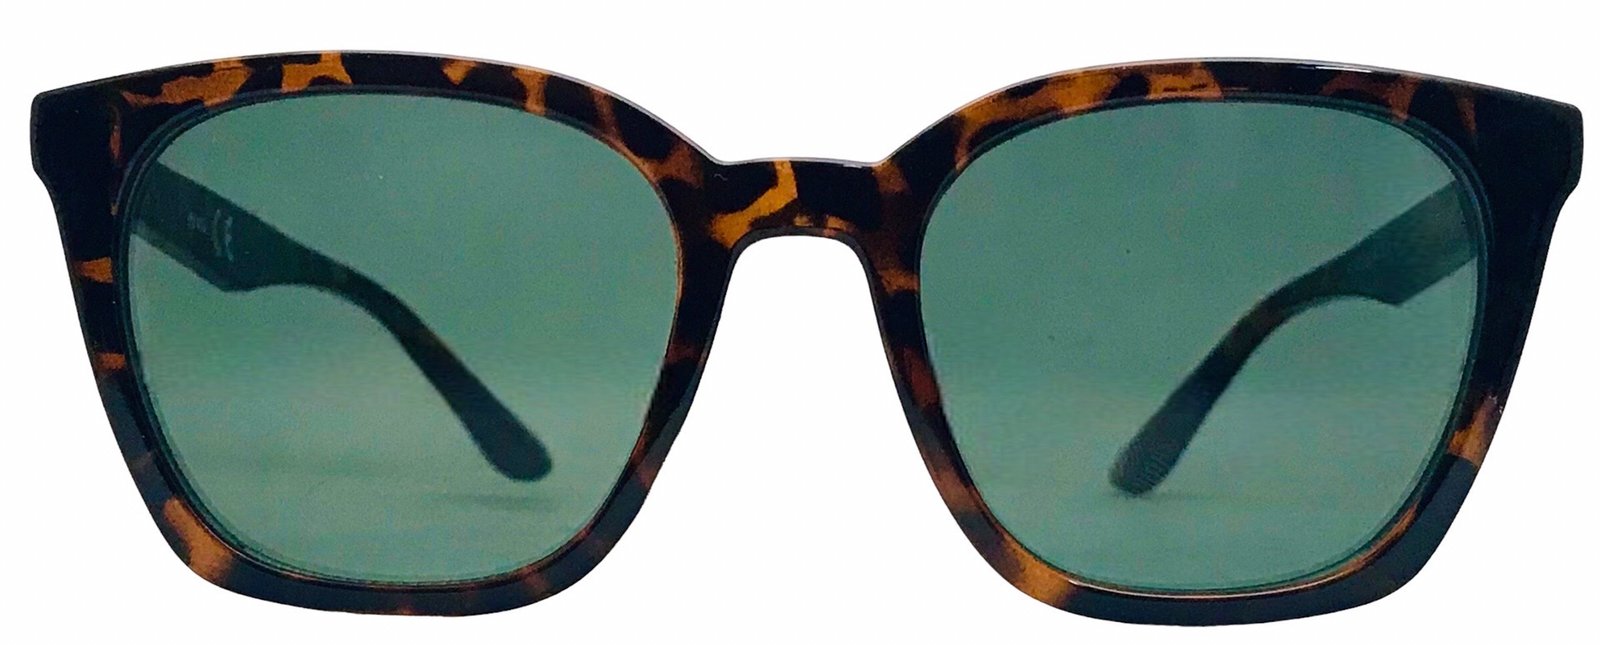 Provogue Sunglasses Sweaters Case - Buy Provogue Sunglasses Sweaters Case  online in India